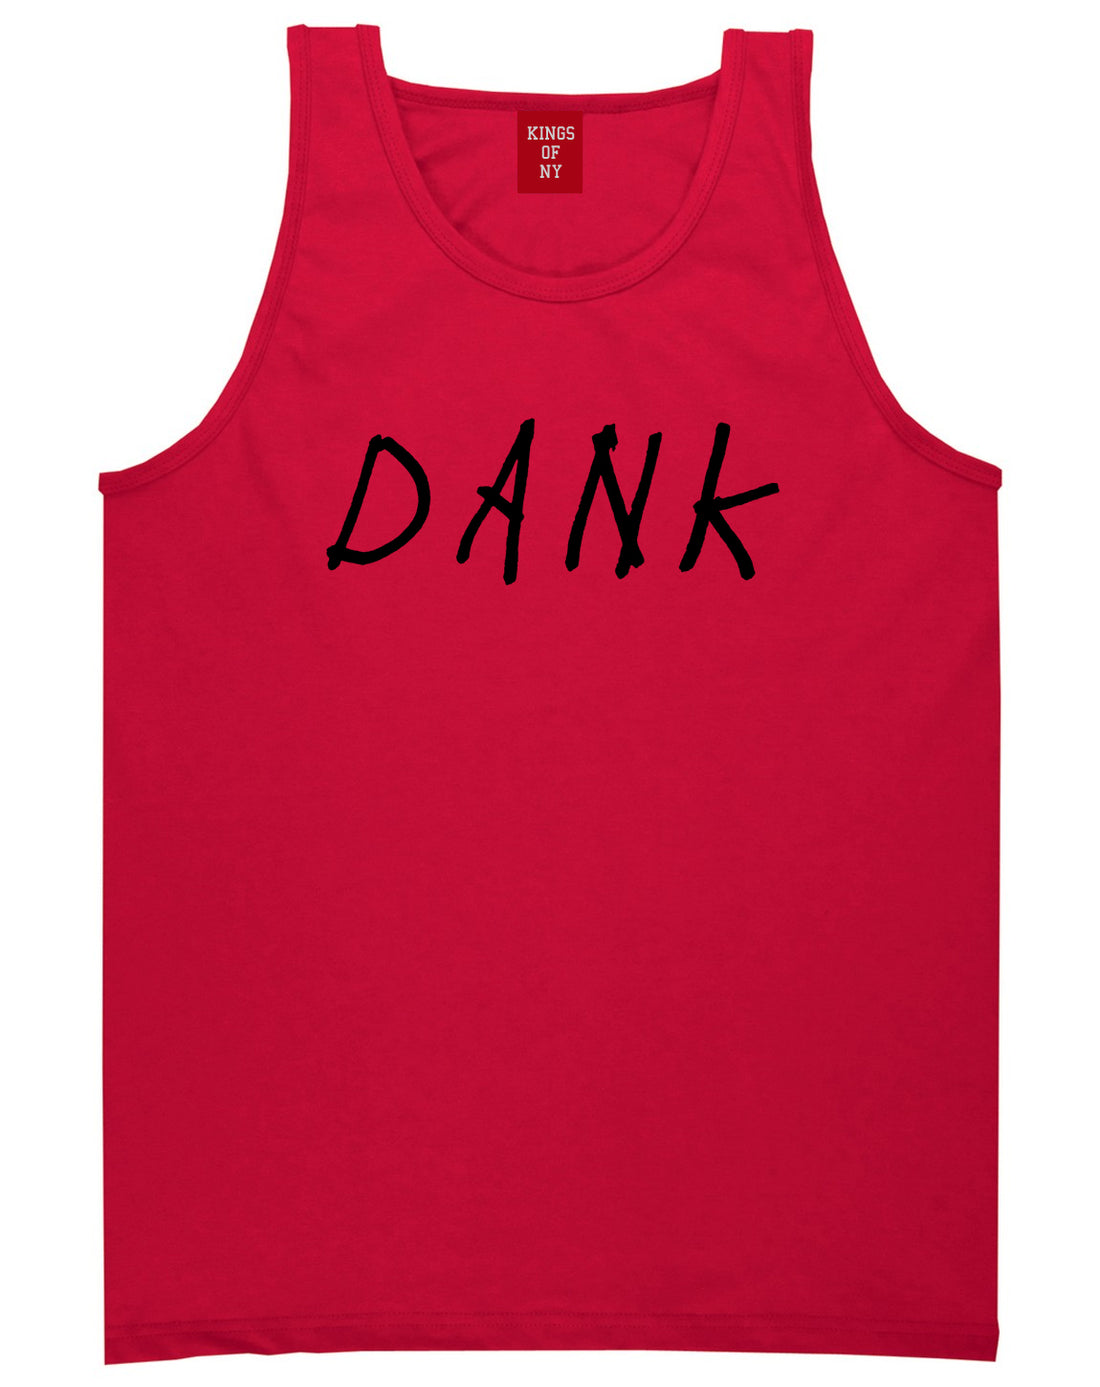 Dank Mens Red Tank Top Shirt by Kings Of NY